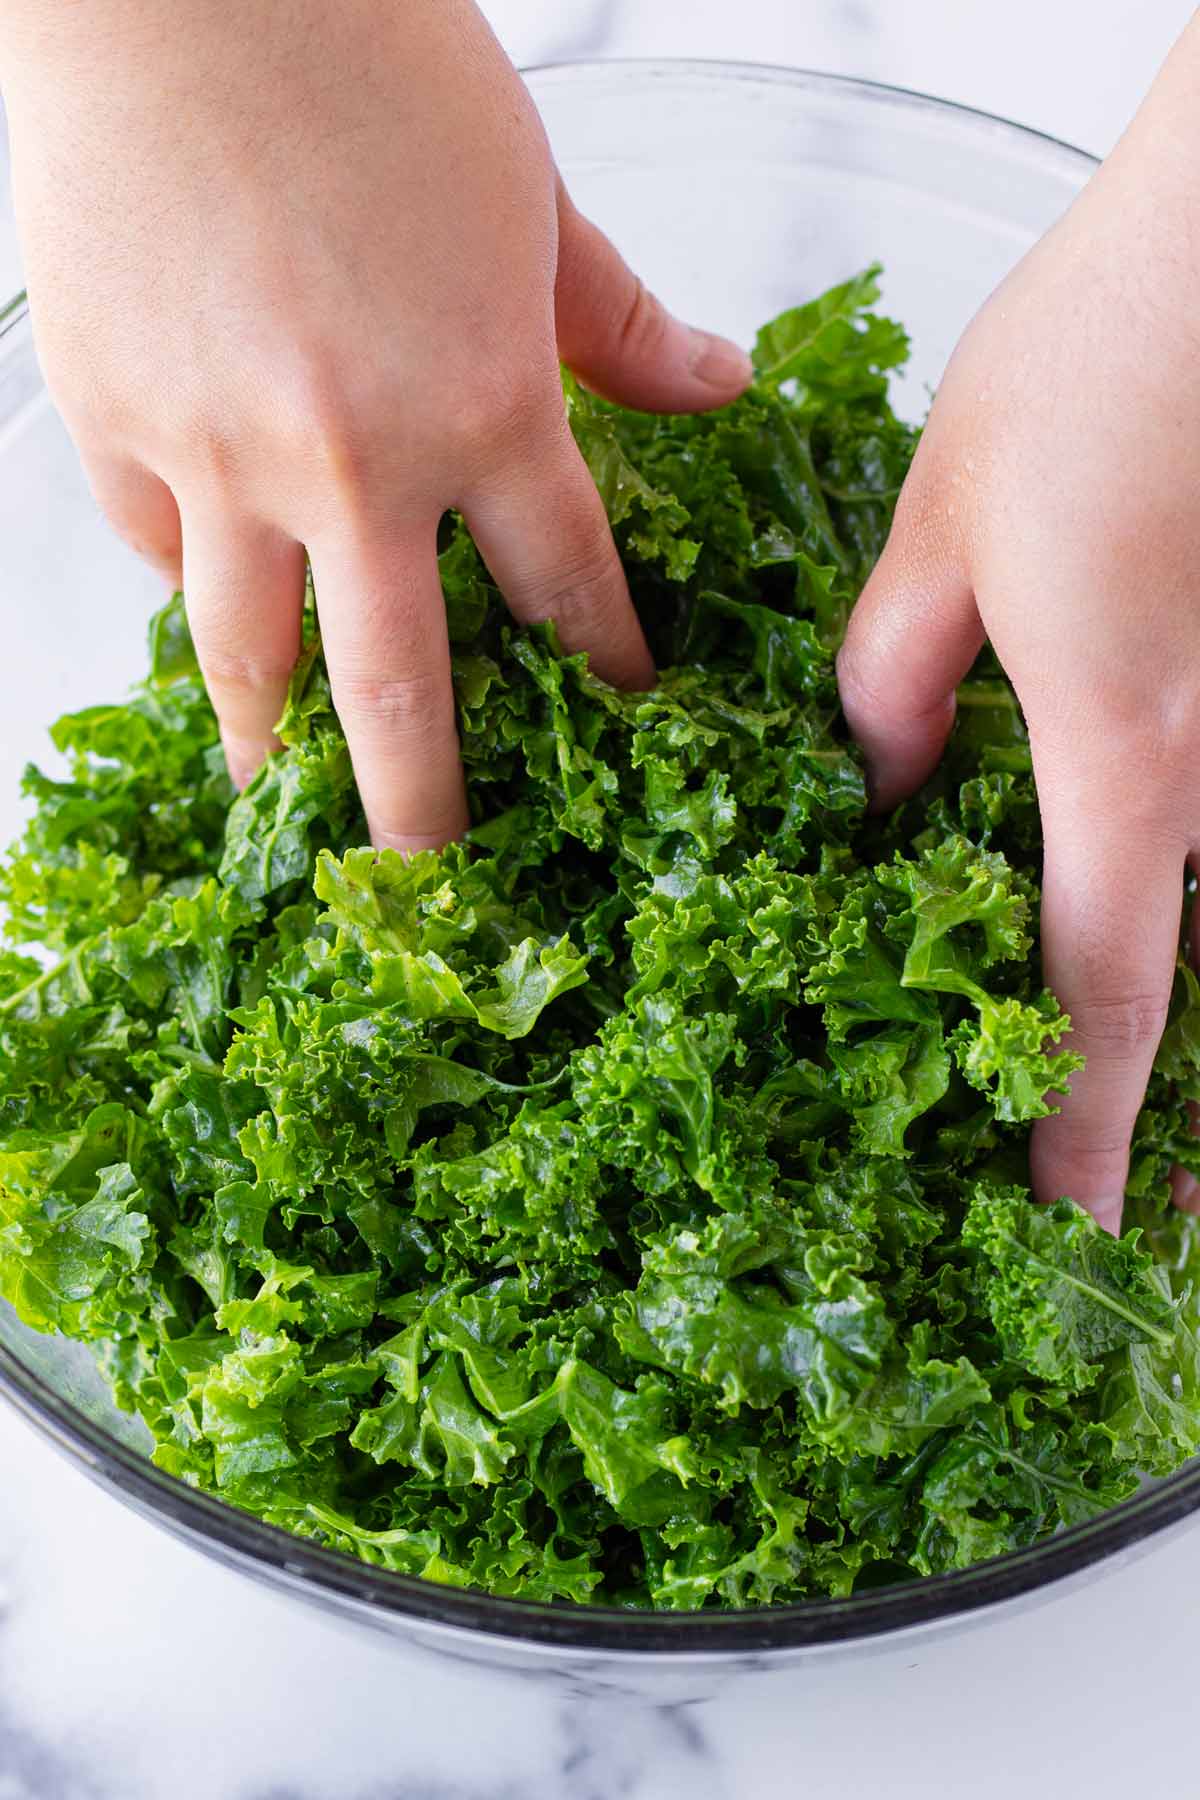 massaging chopped kale to soften